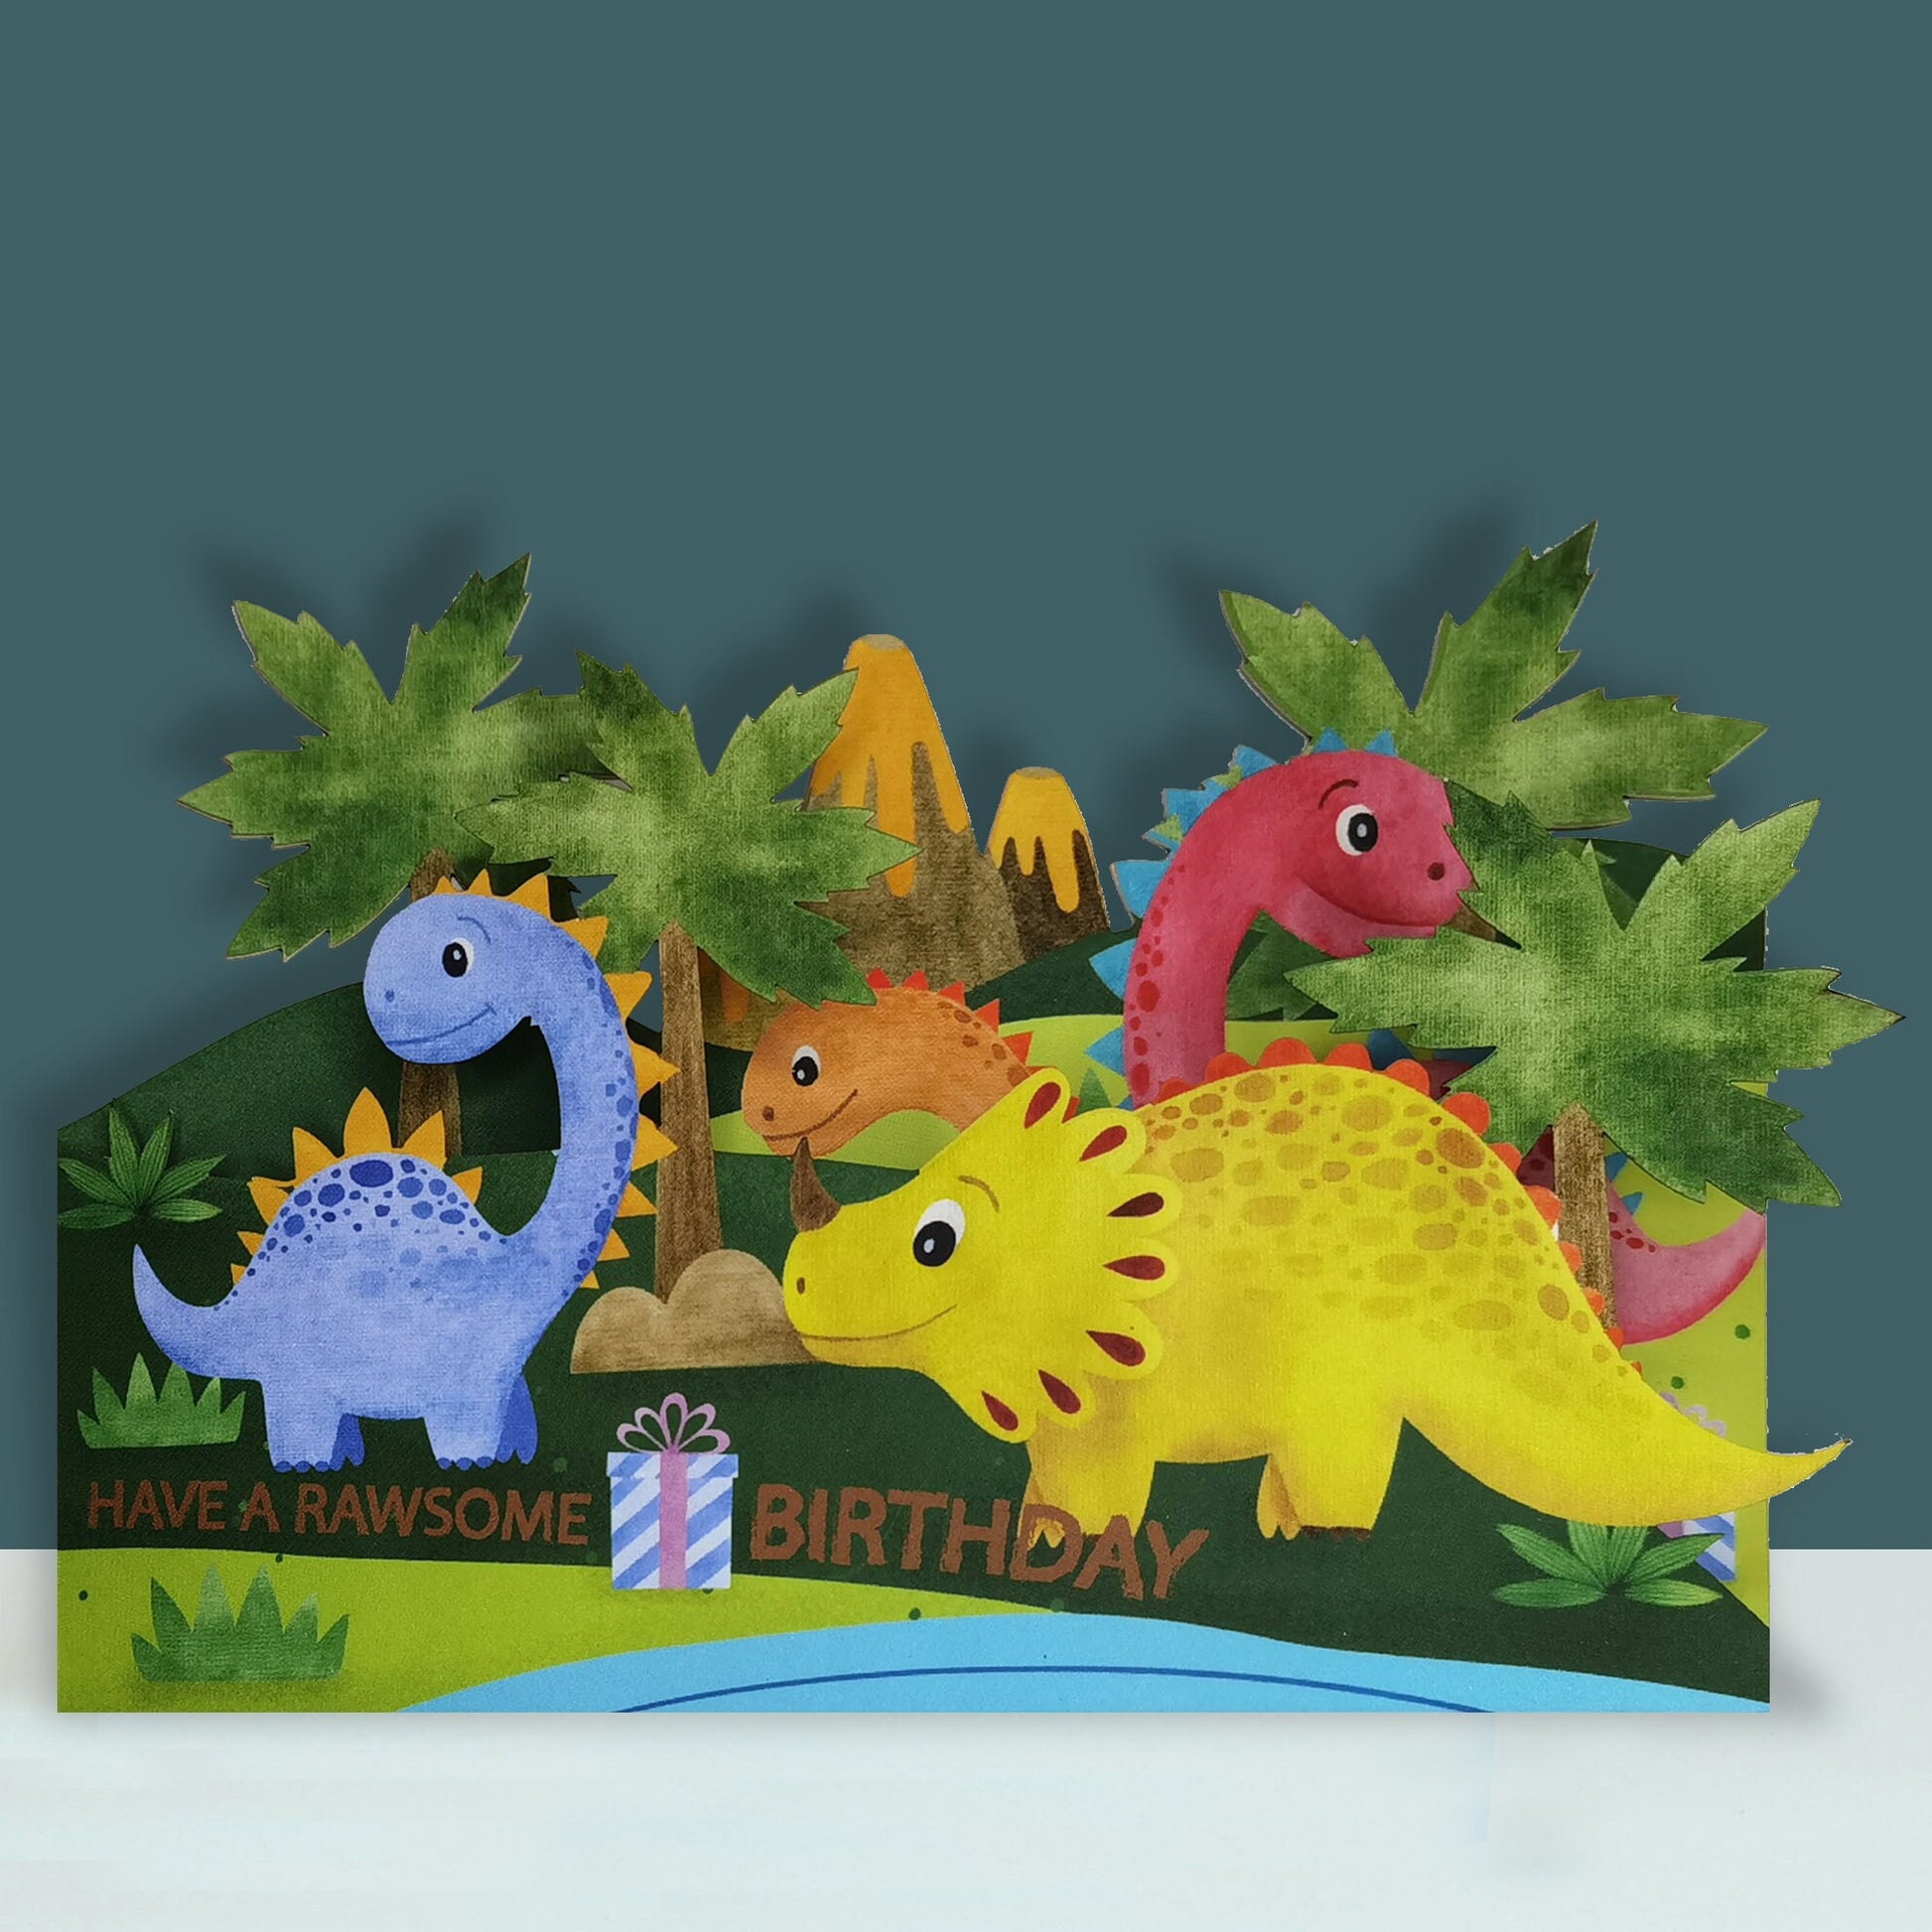 3D Pop Up Dinosaur Card, Birthday Card For Kids, Dinosaurs Card, Pop up Birthday Card, Cards For Children, Pop Up cards, 3D Design